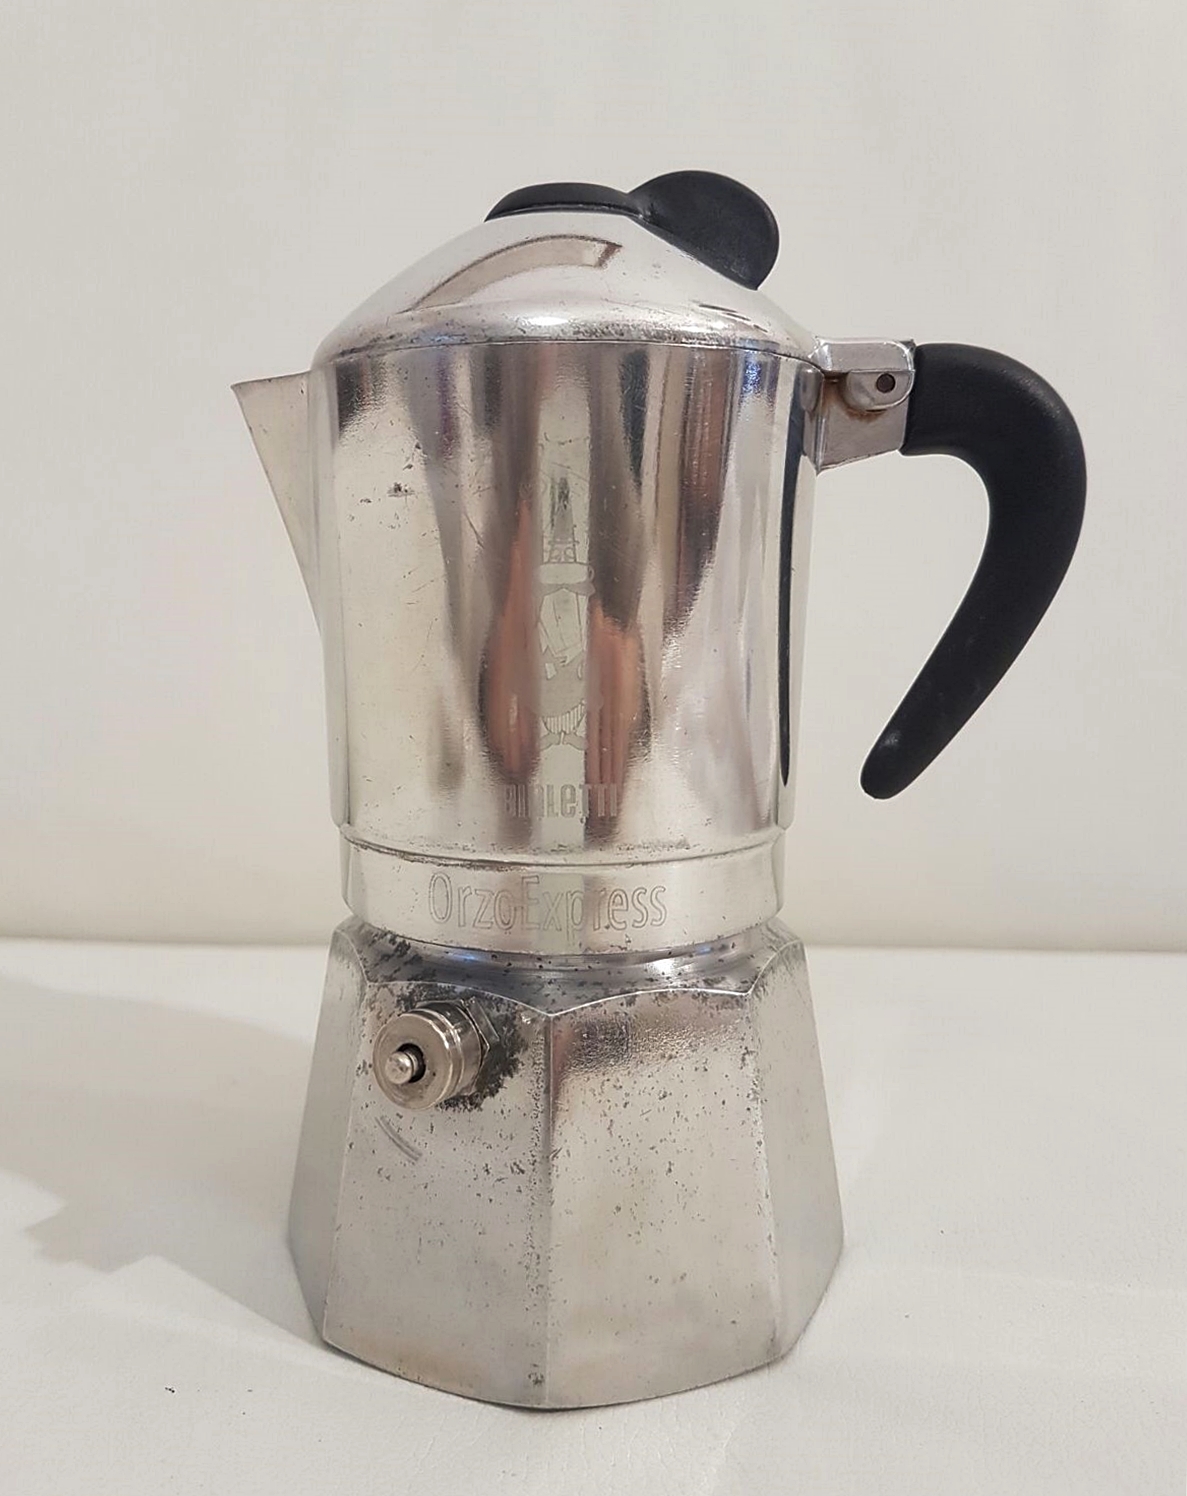 DULCEKAPPAVINTAGE: BIALETTI  ZERA  CAFFETTIERA CAFFÈ D'ORZO ORZO EXPRESS  - USED